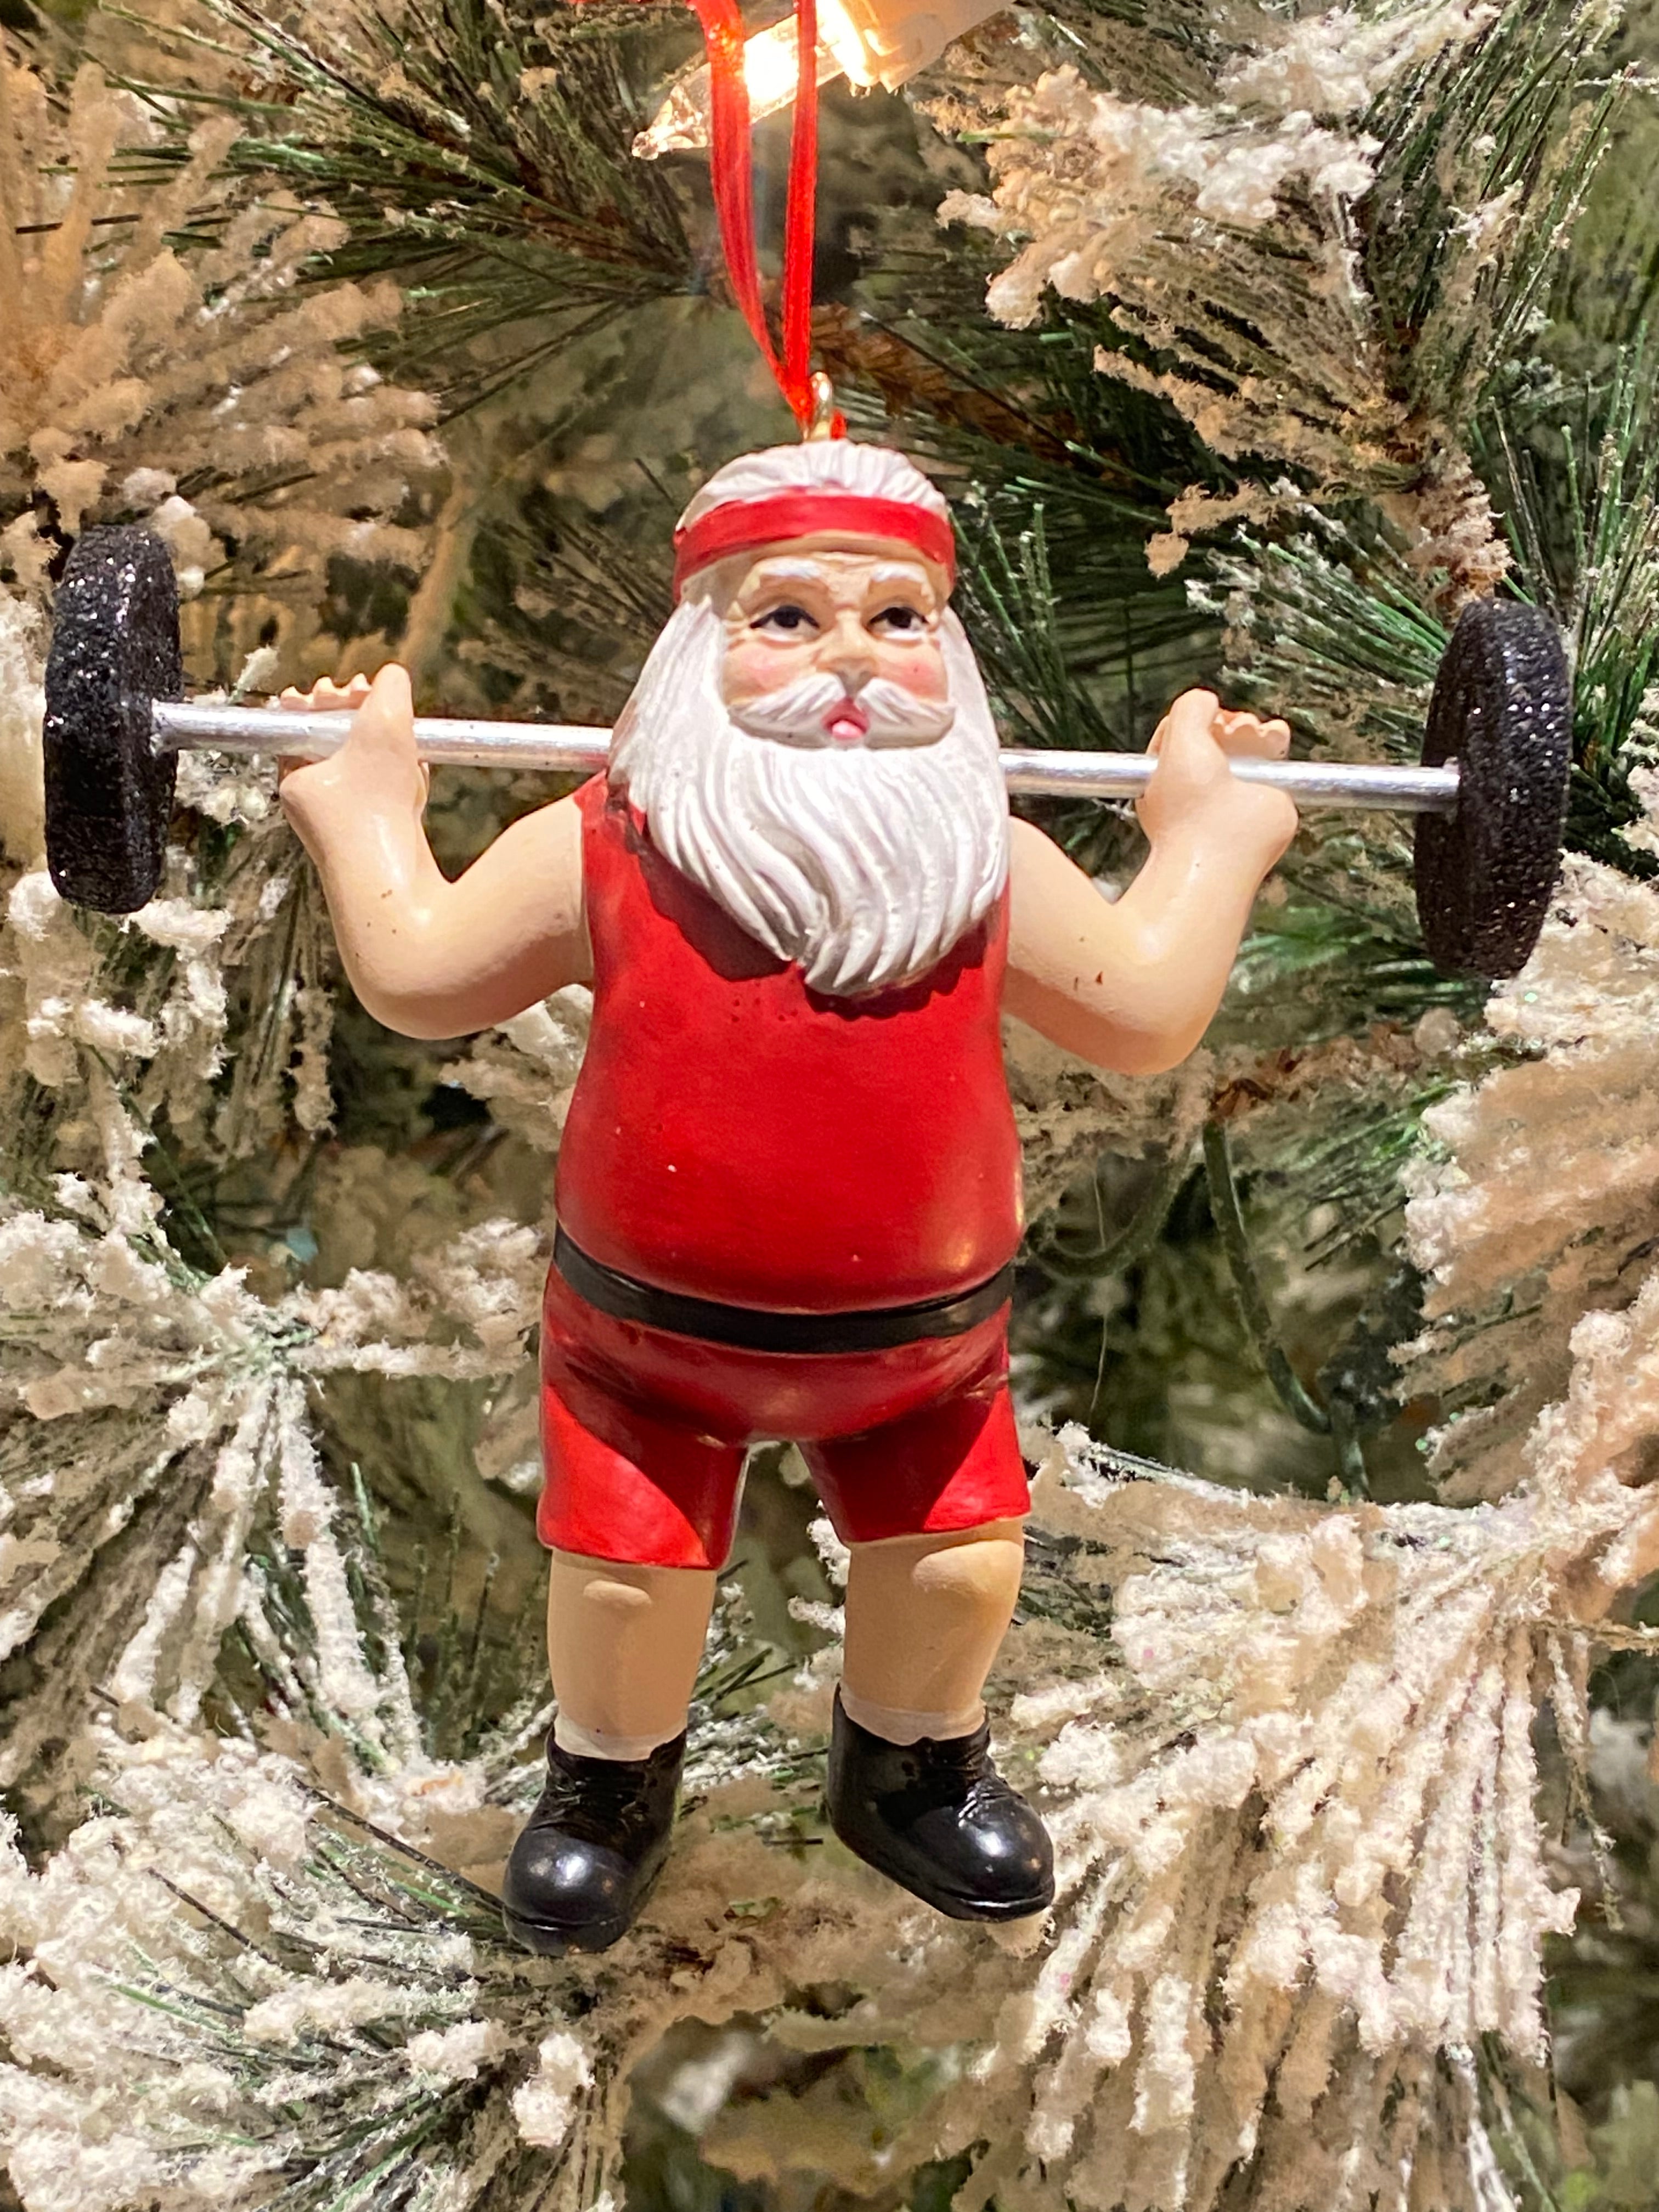 Weightlifter Santa